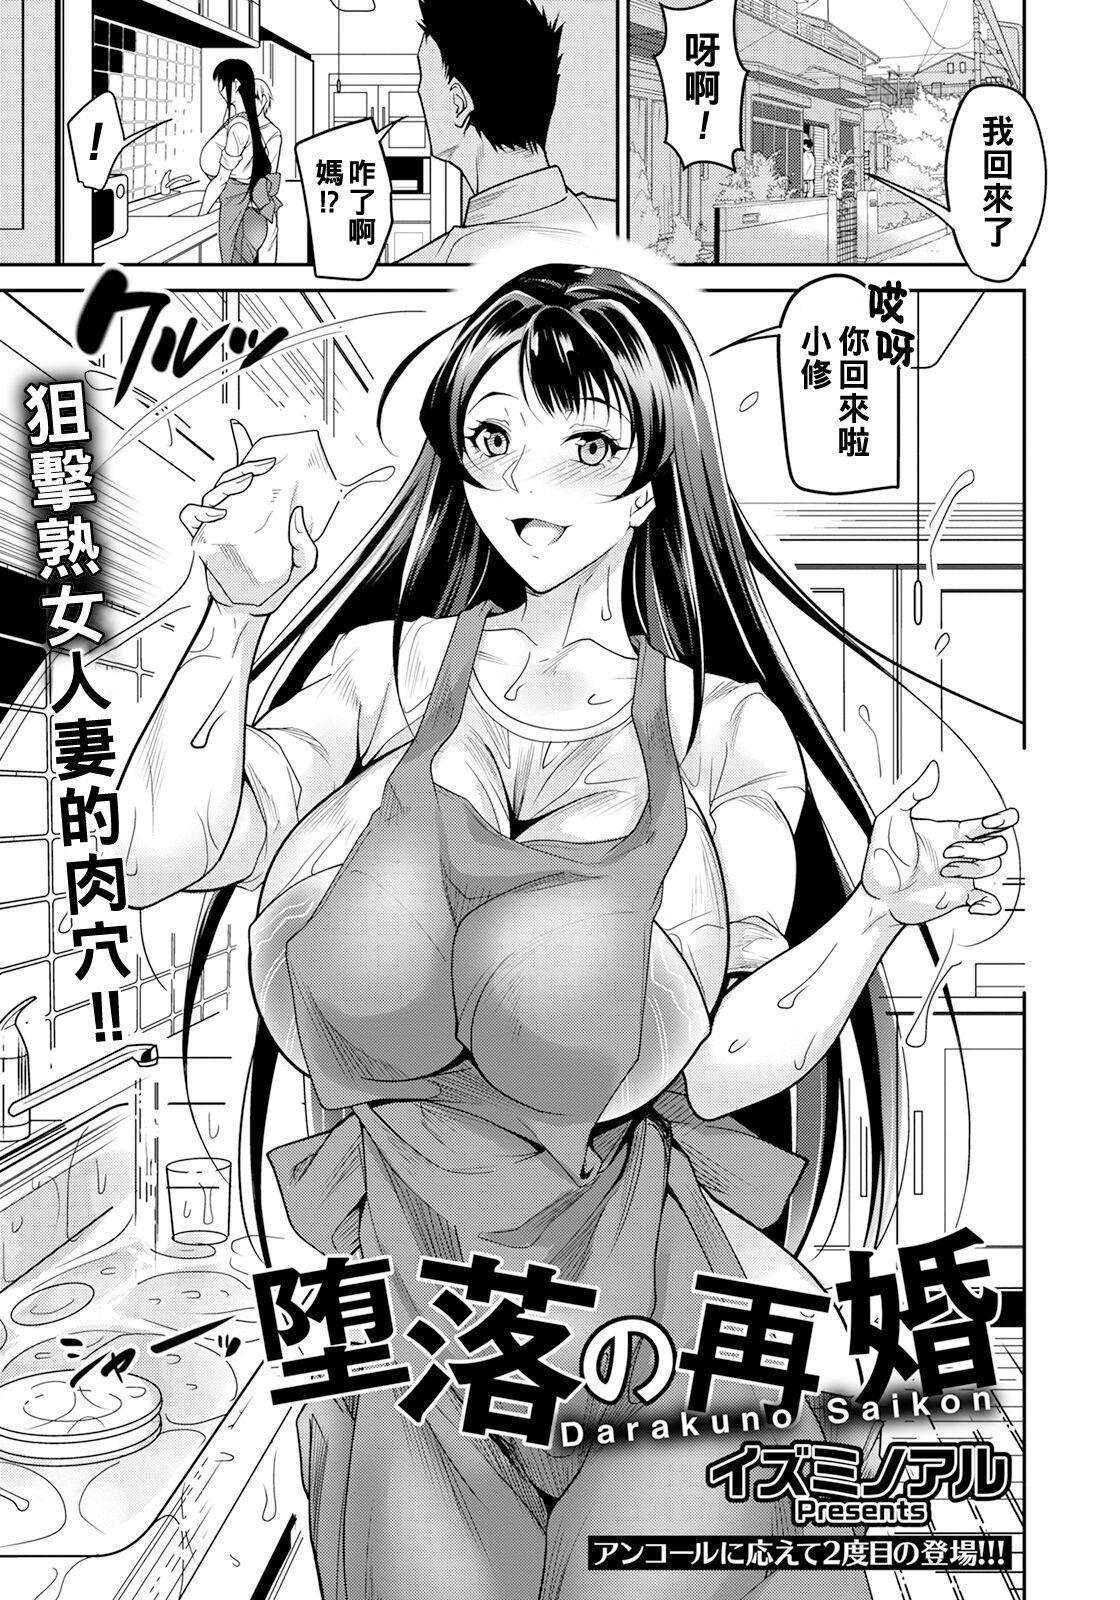 Gostosa Daraku no Saikon Pussy Orgasm - Page 1